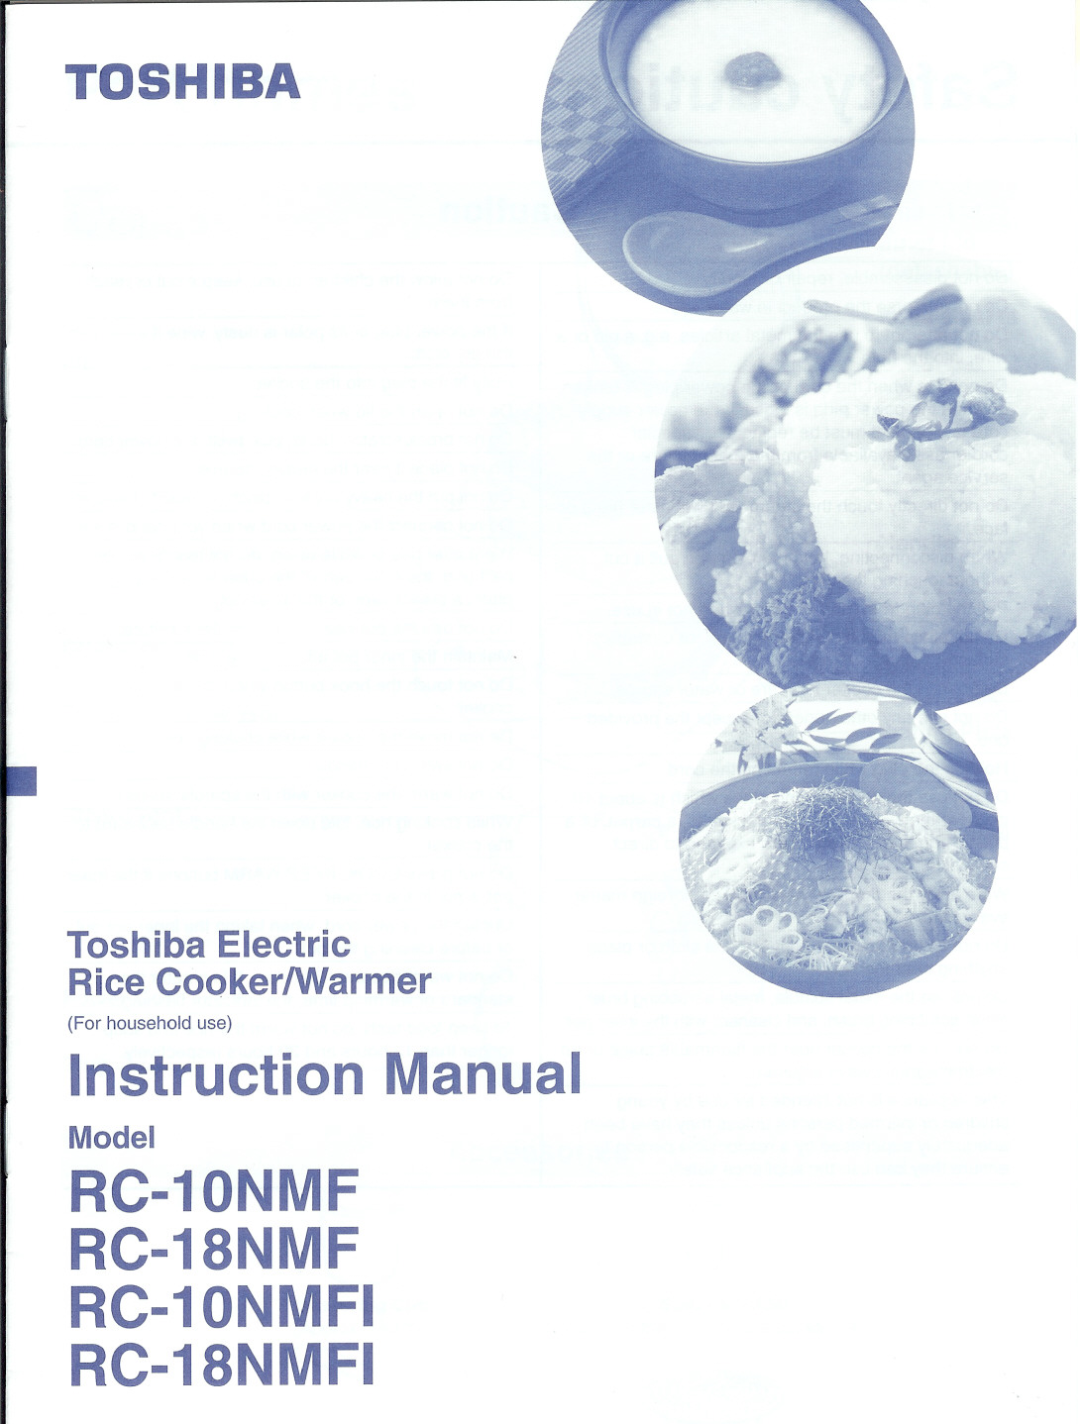 Toshiba instruction manual Instruction Manual, RC-10NMF RC-18NMF RC-10NMFI RC-18NMFI, Toshiba, Model 